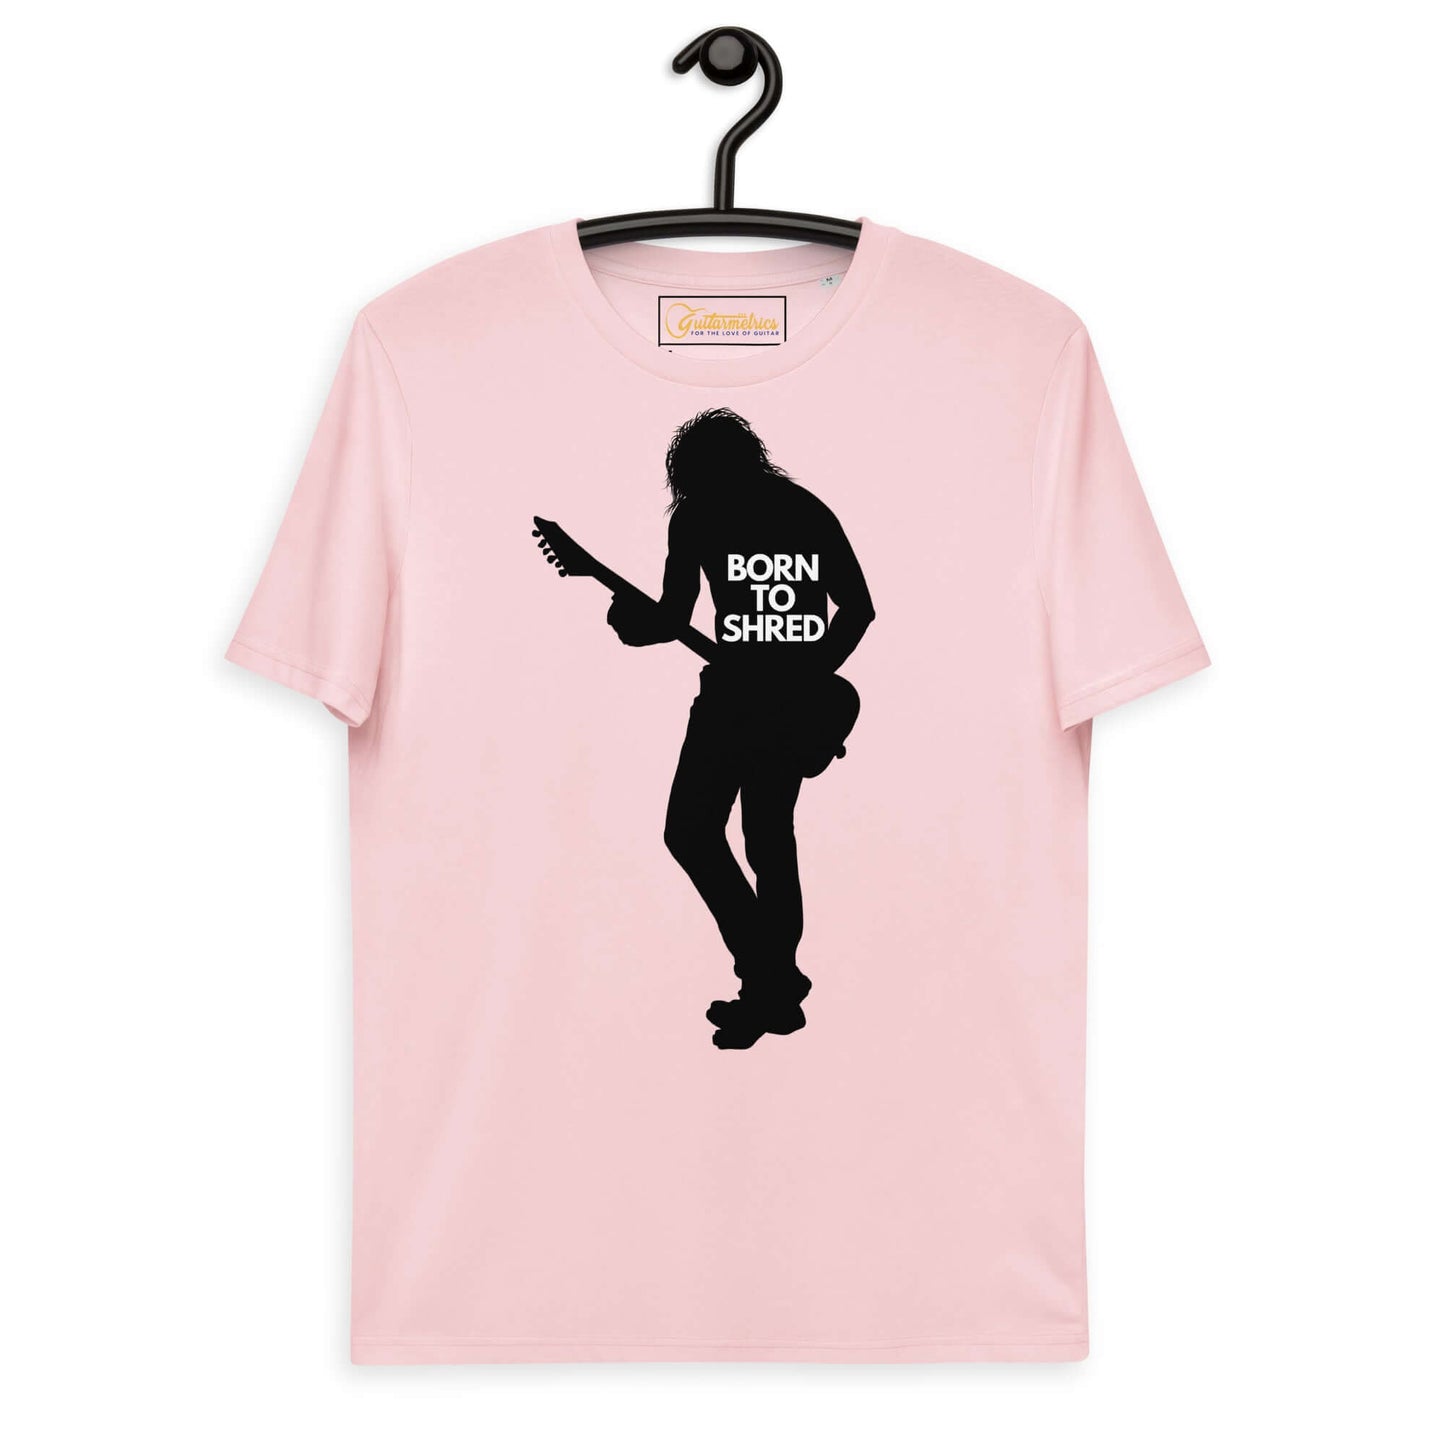 Born to shred Unisex organic cotton t-shirt Cotton Pink guitarmetrics